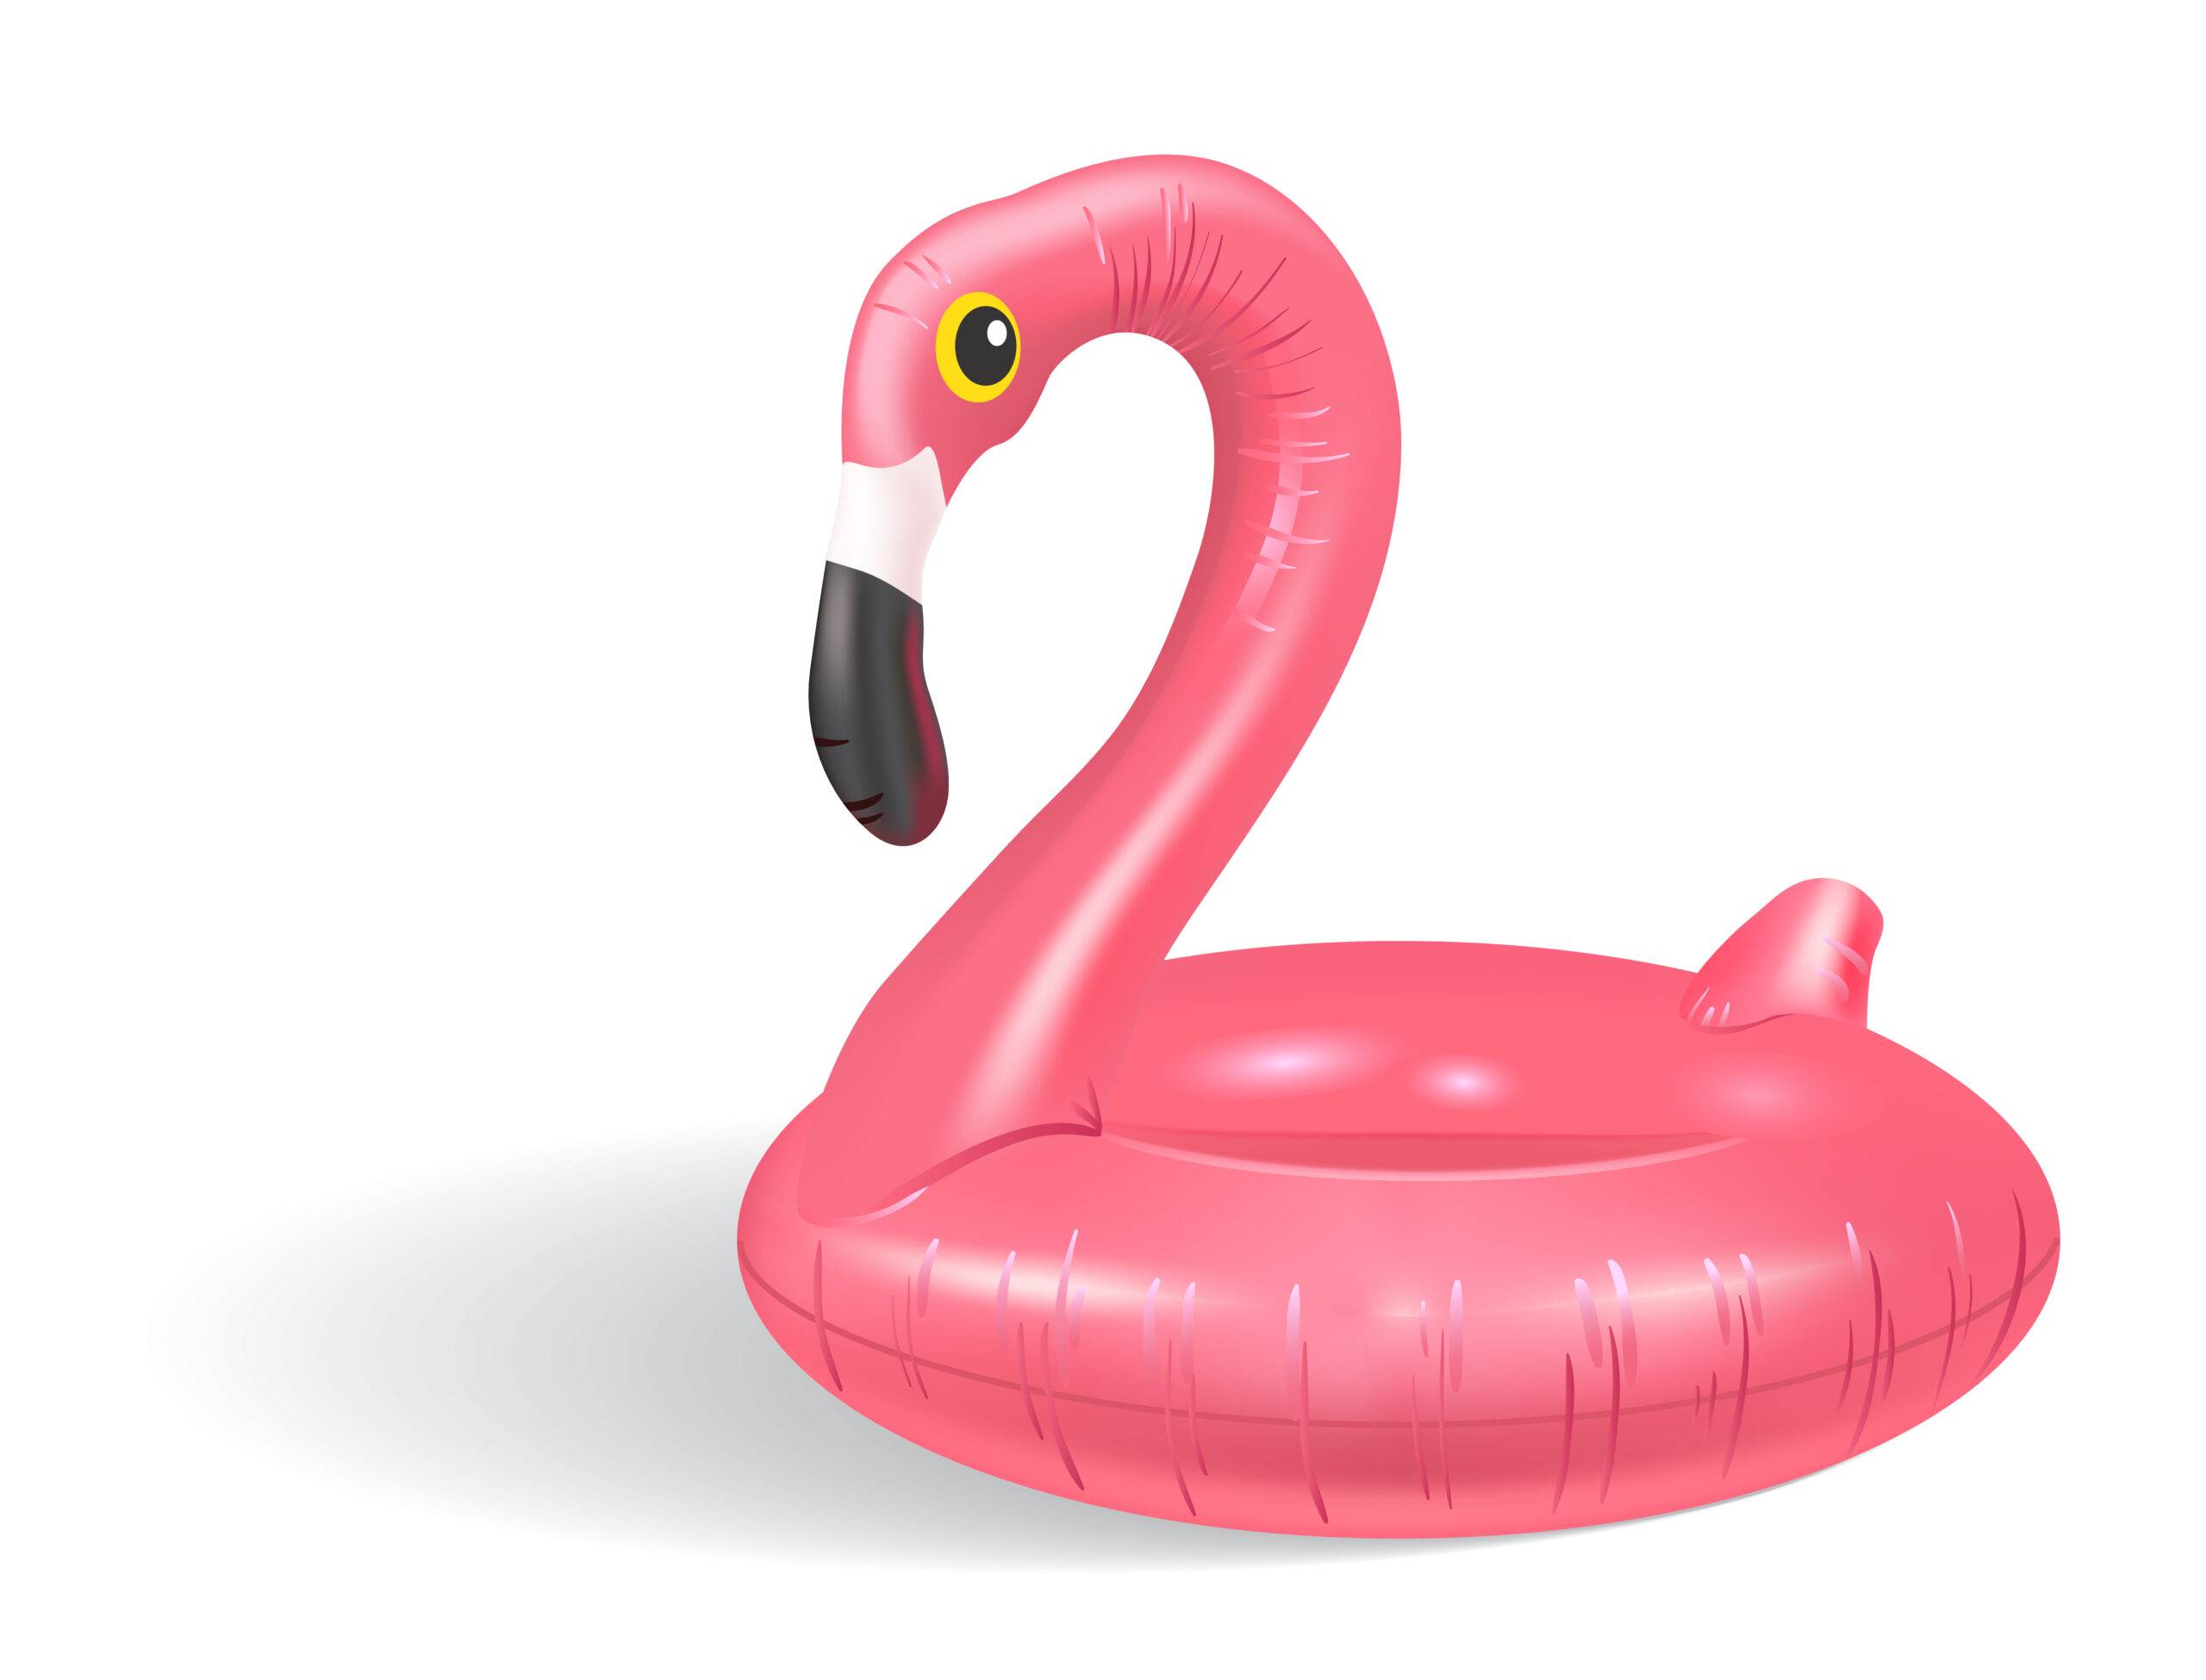 Pink flamingo pool float, perfect for pontoon boat fun.